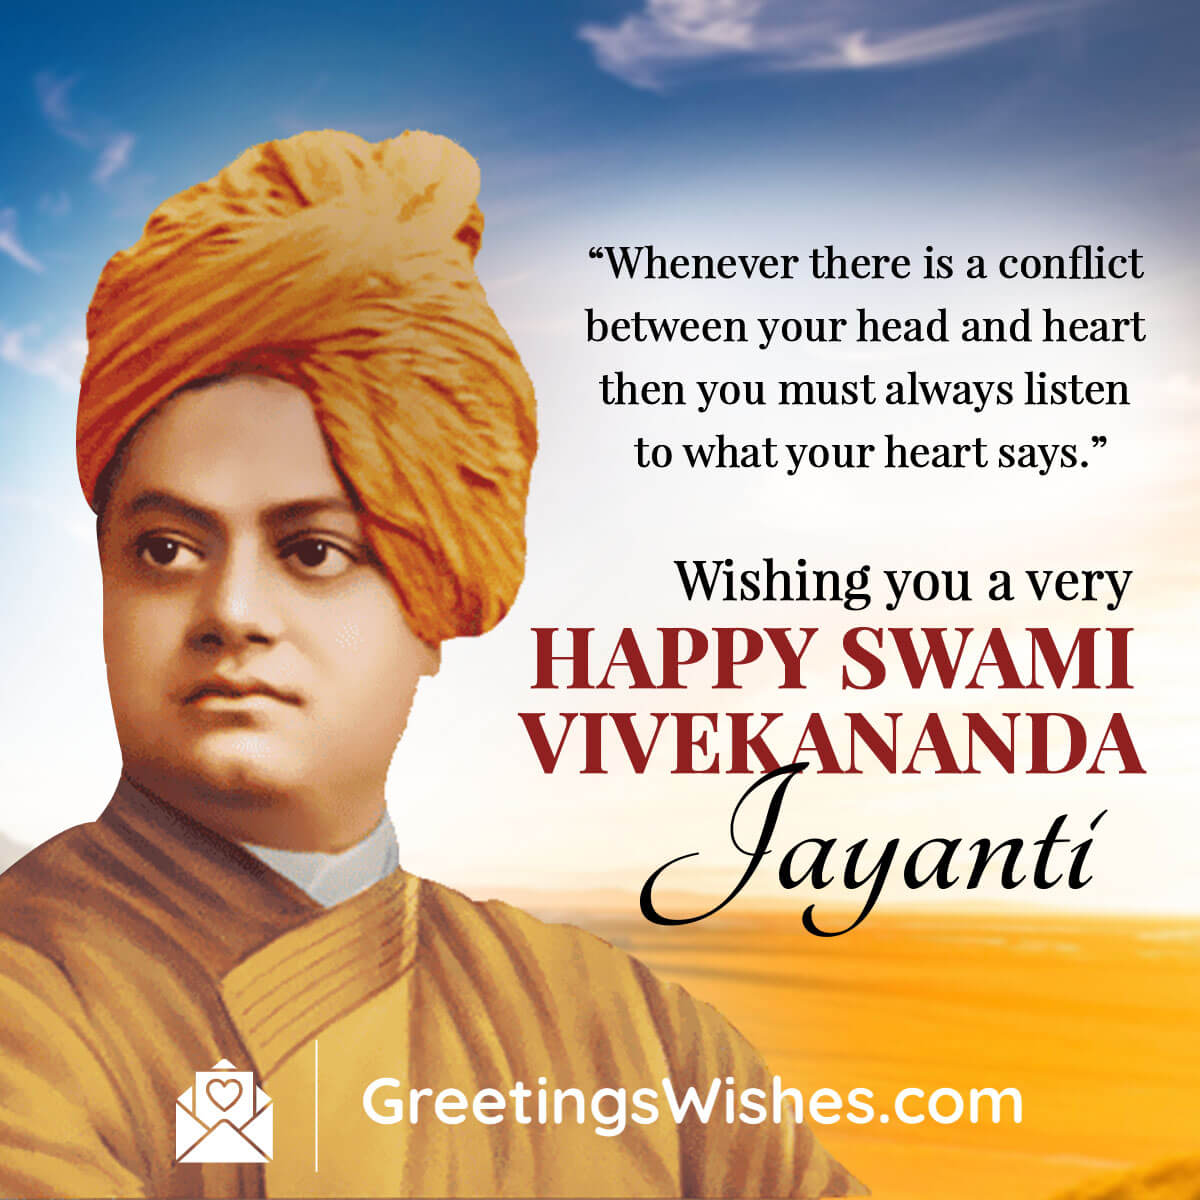 Swami Vivekananda Jayanti Greetings